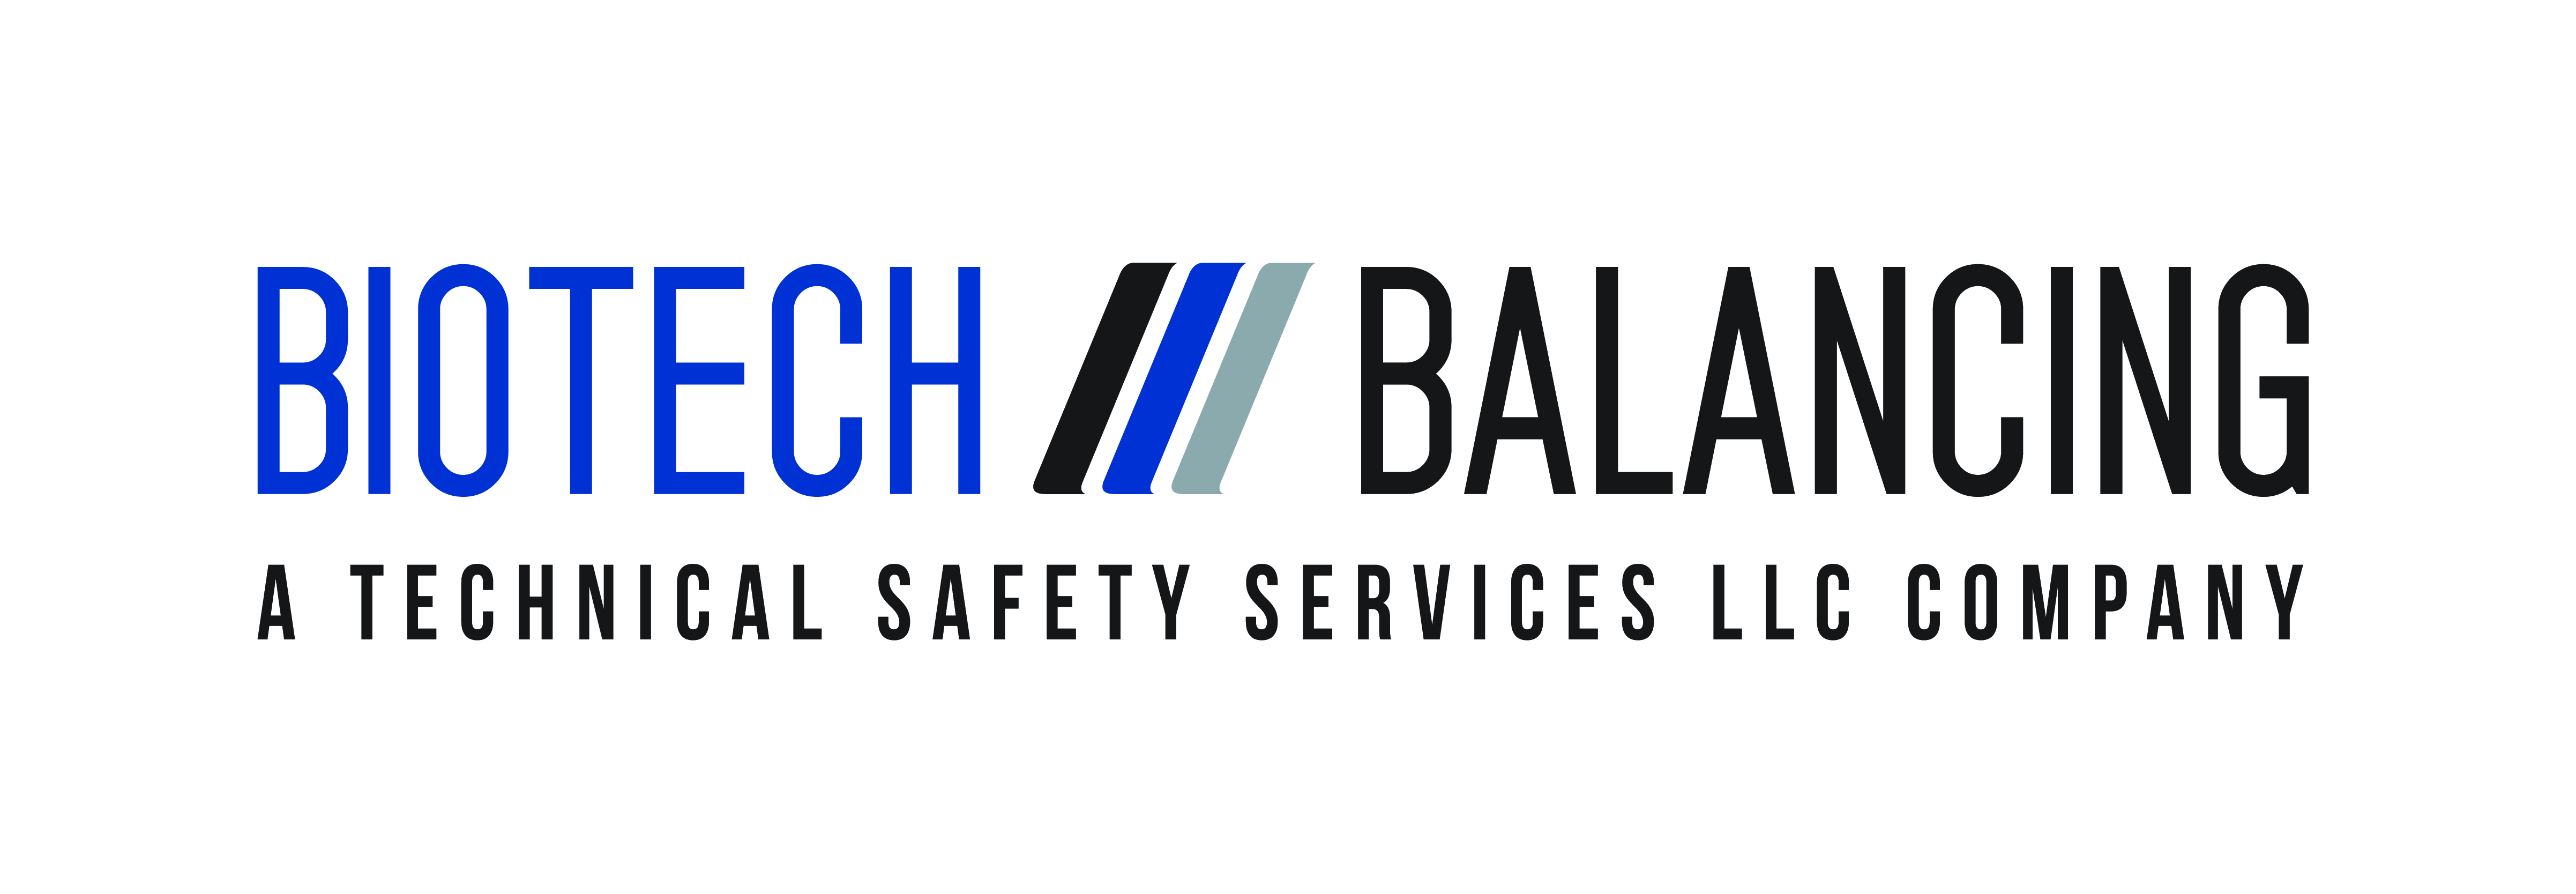 biotech balancing/tss logo